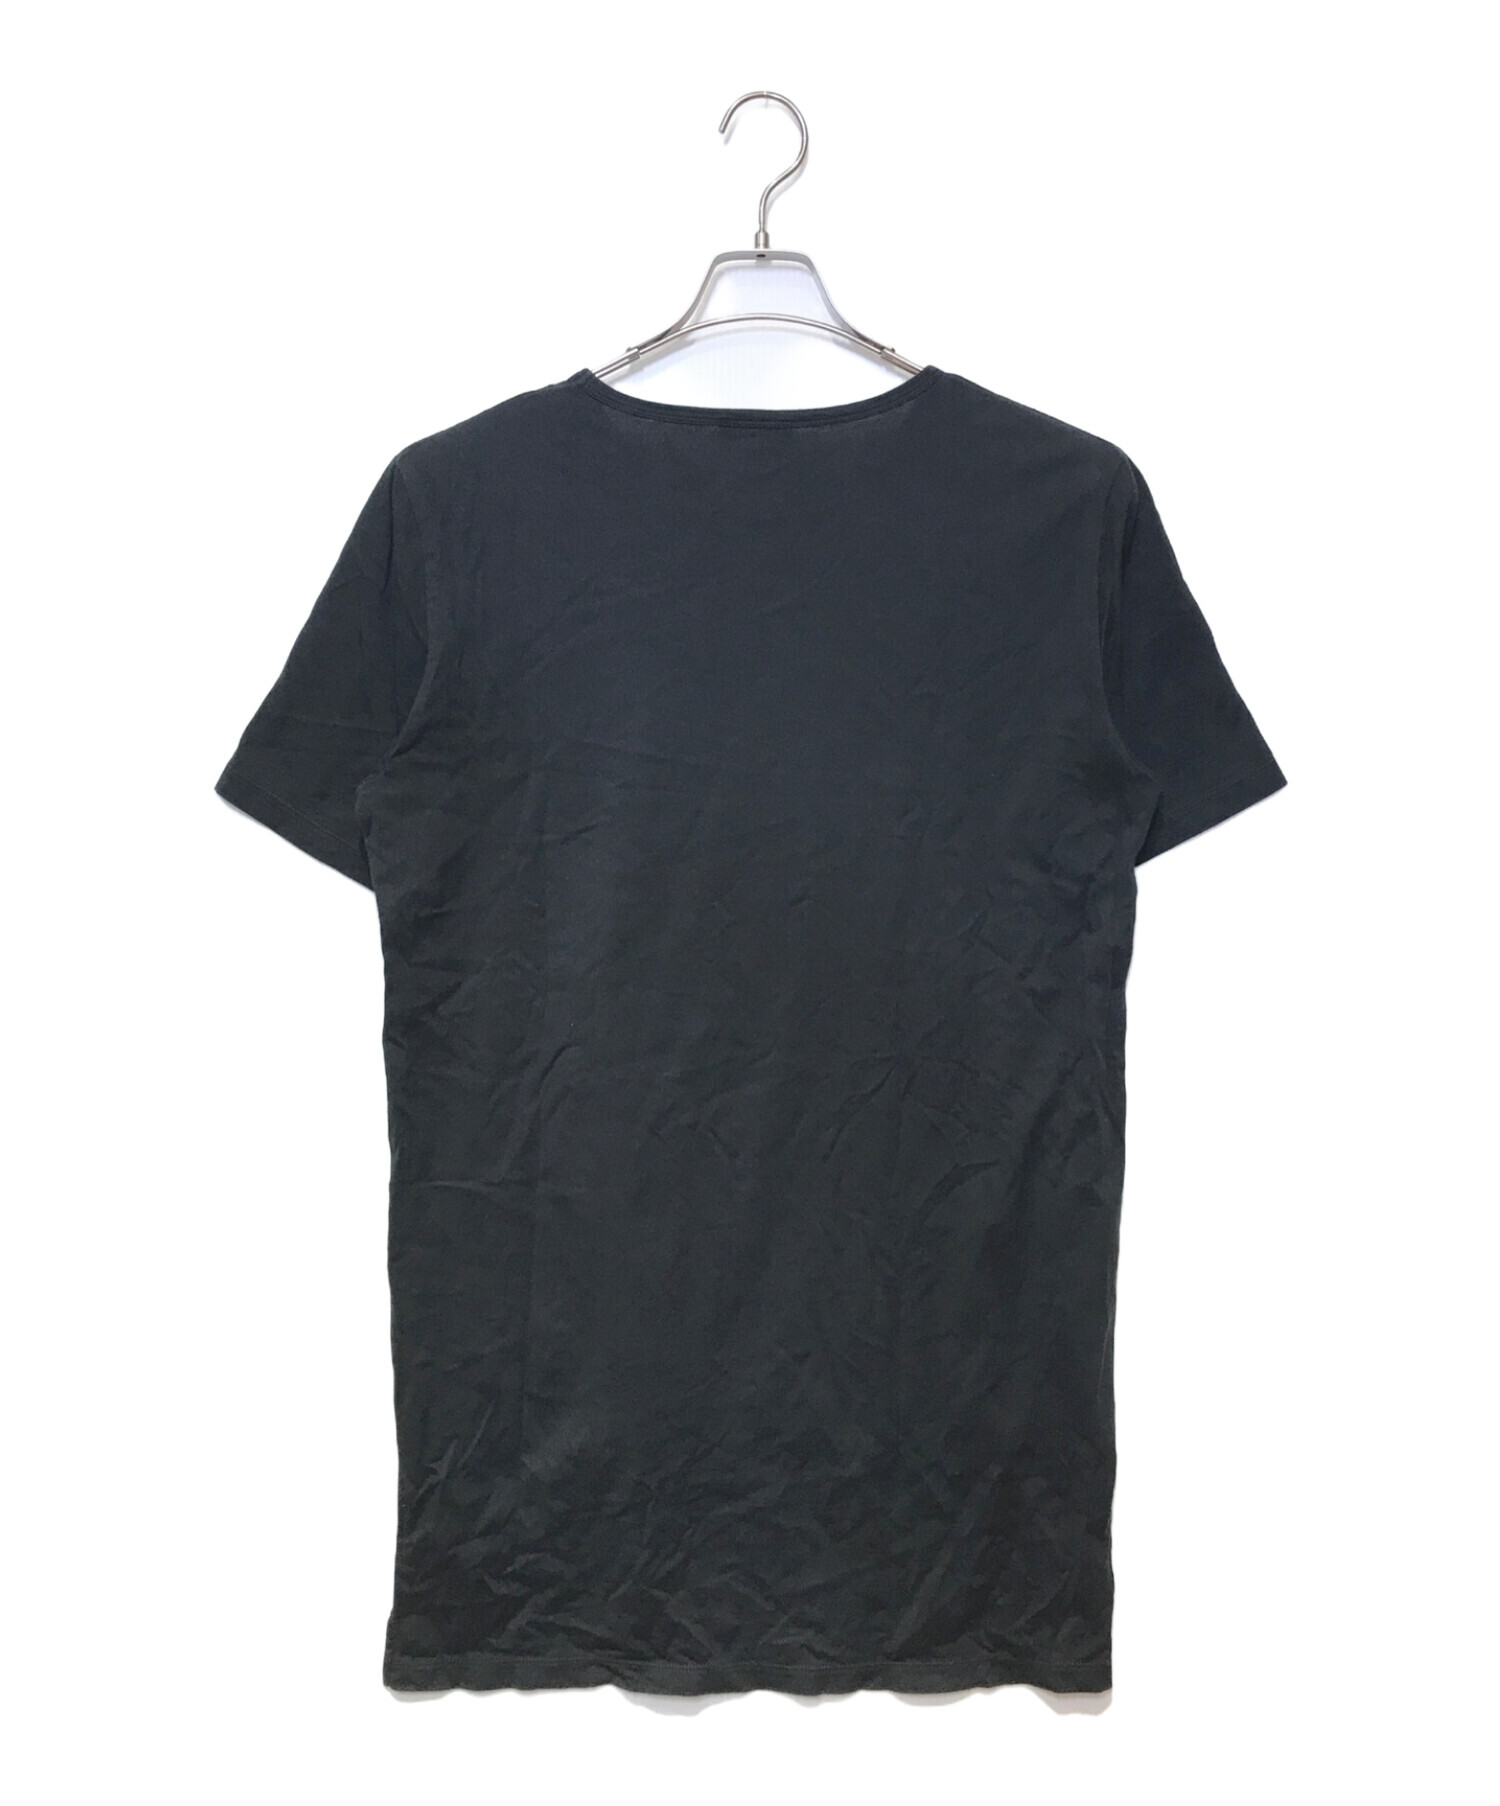 Vivienne Westwood man (ヴィヴィアン ウェストウッド マン) FINGER PRINT リラックスTシャツ ブラック  サイズ:48（M相当）